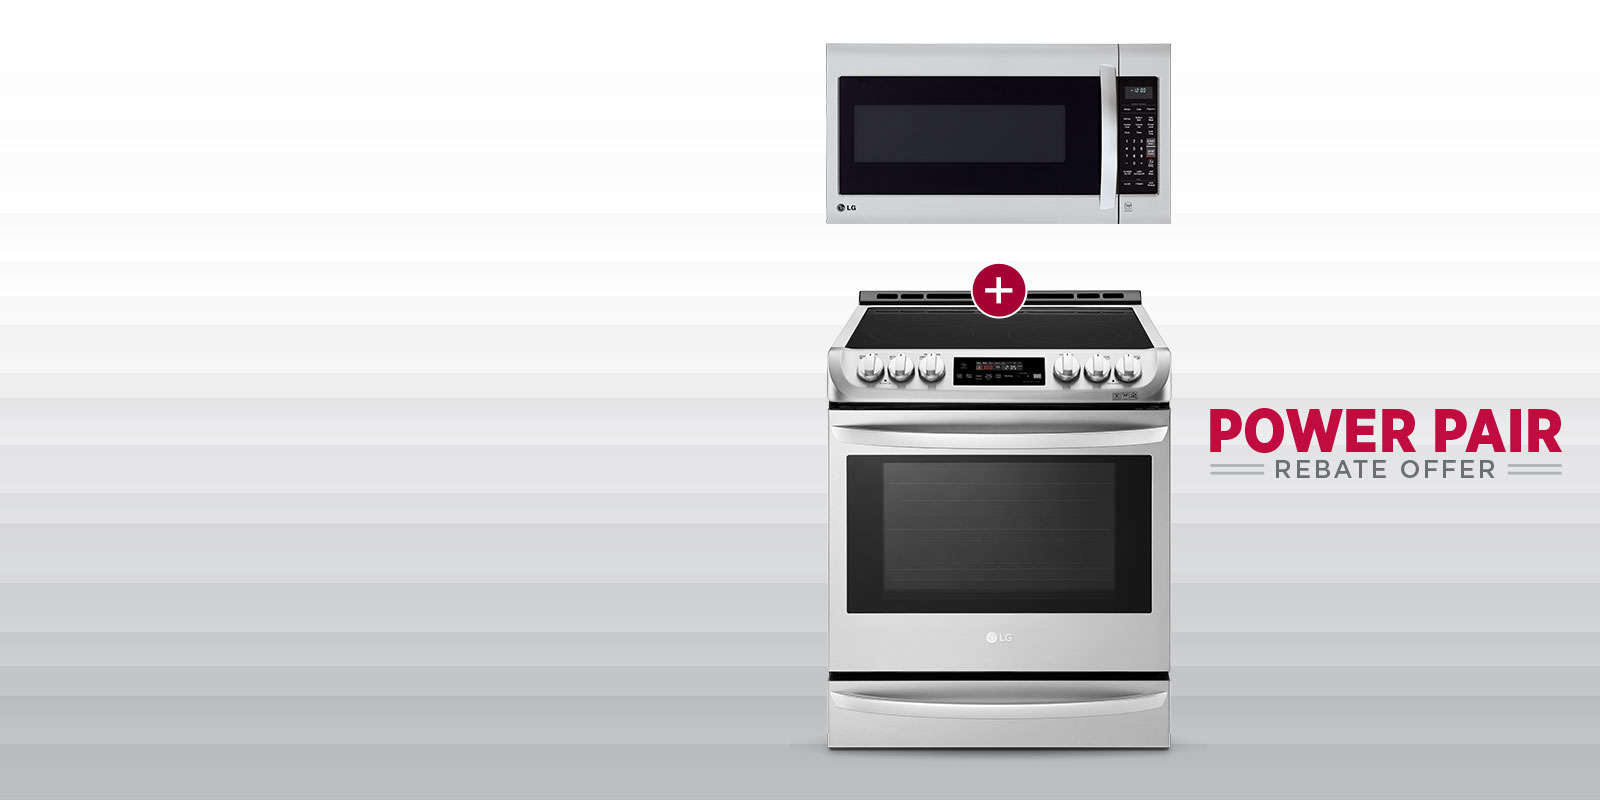 lg-appliances-electronics-lg-washers-dryers-tvs-abt